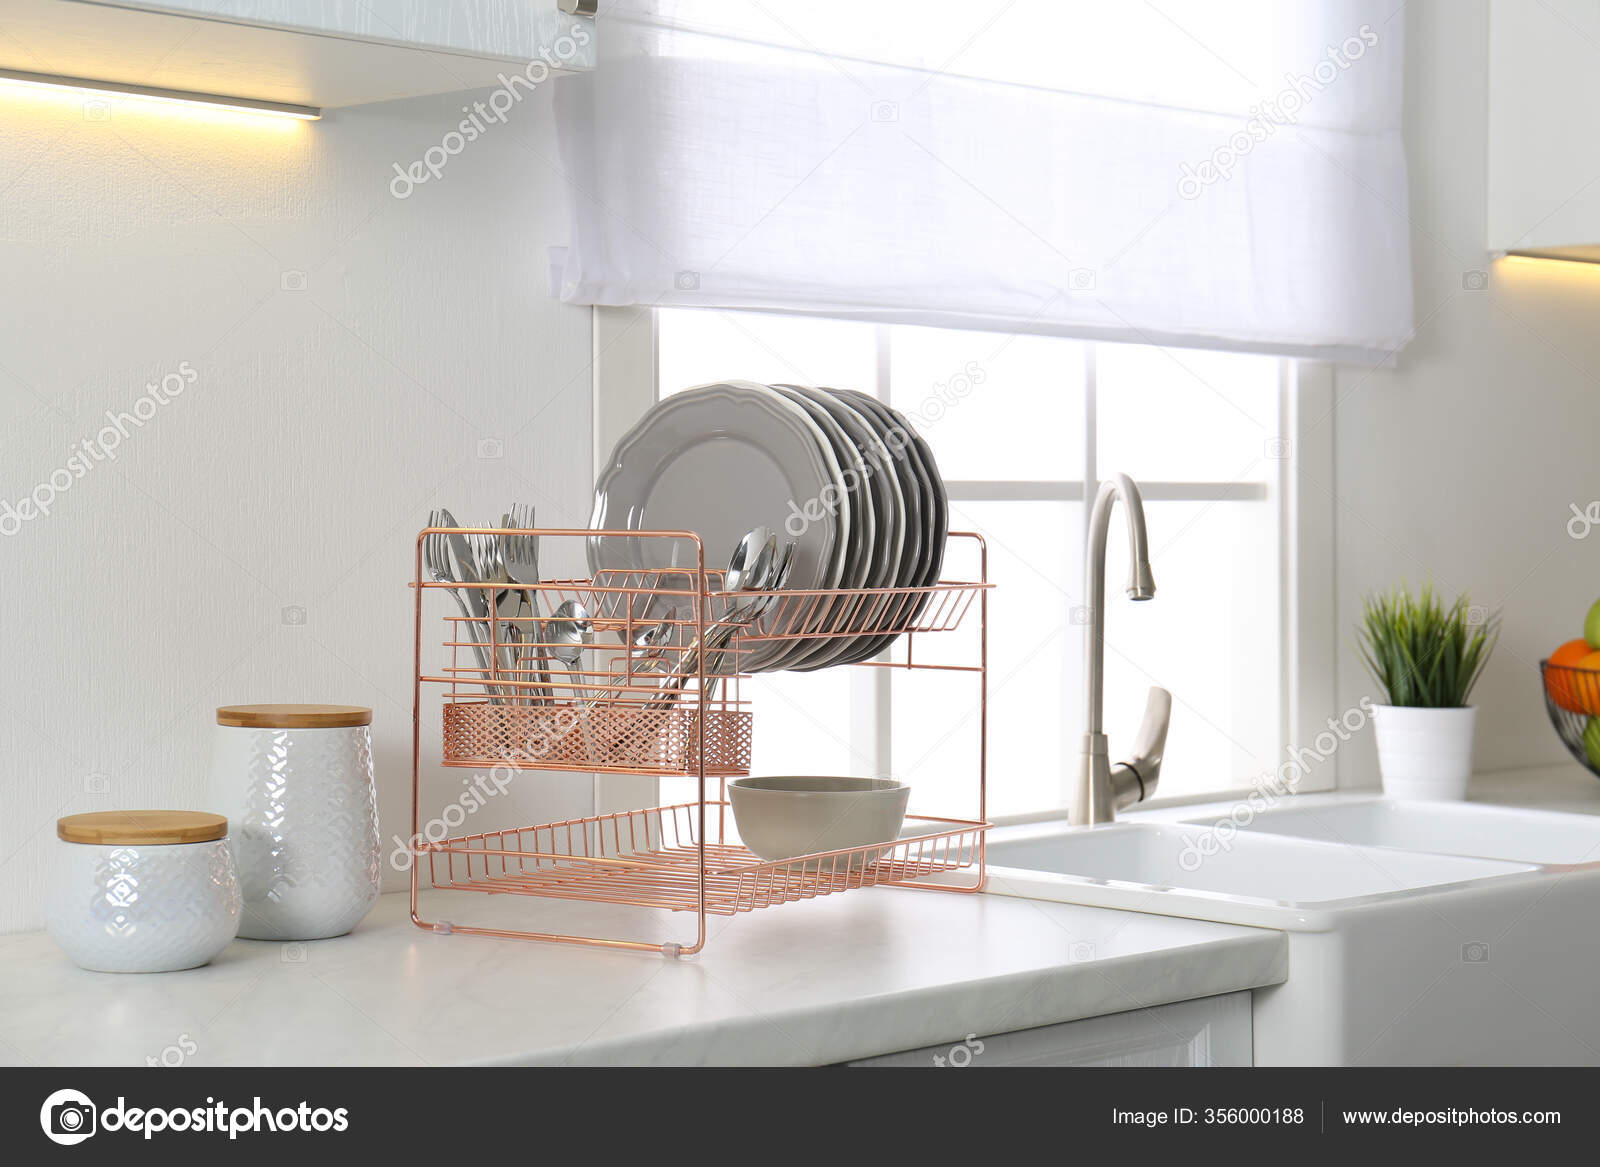 https://st3.depositphotos.com/16122460/35600/i/1600/depositphotos_356000188-stock-photo-clean-dishes-drying-rack-modern.jpg